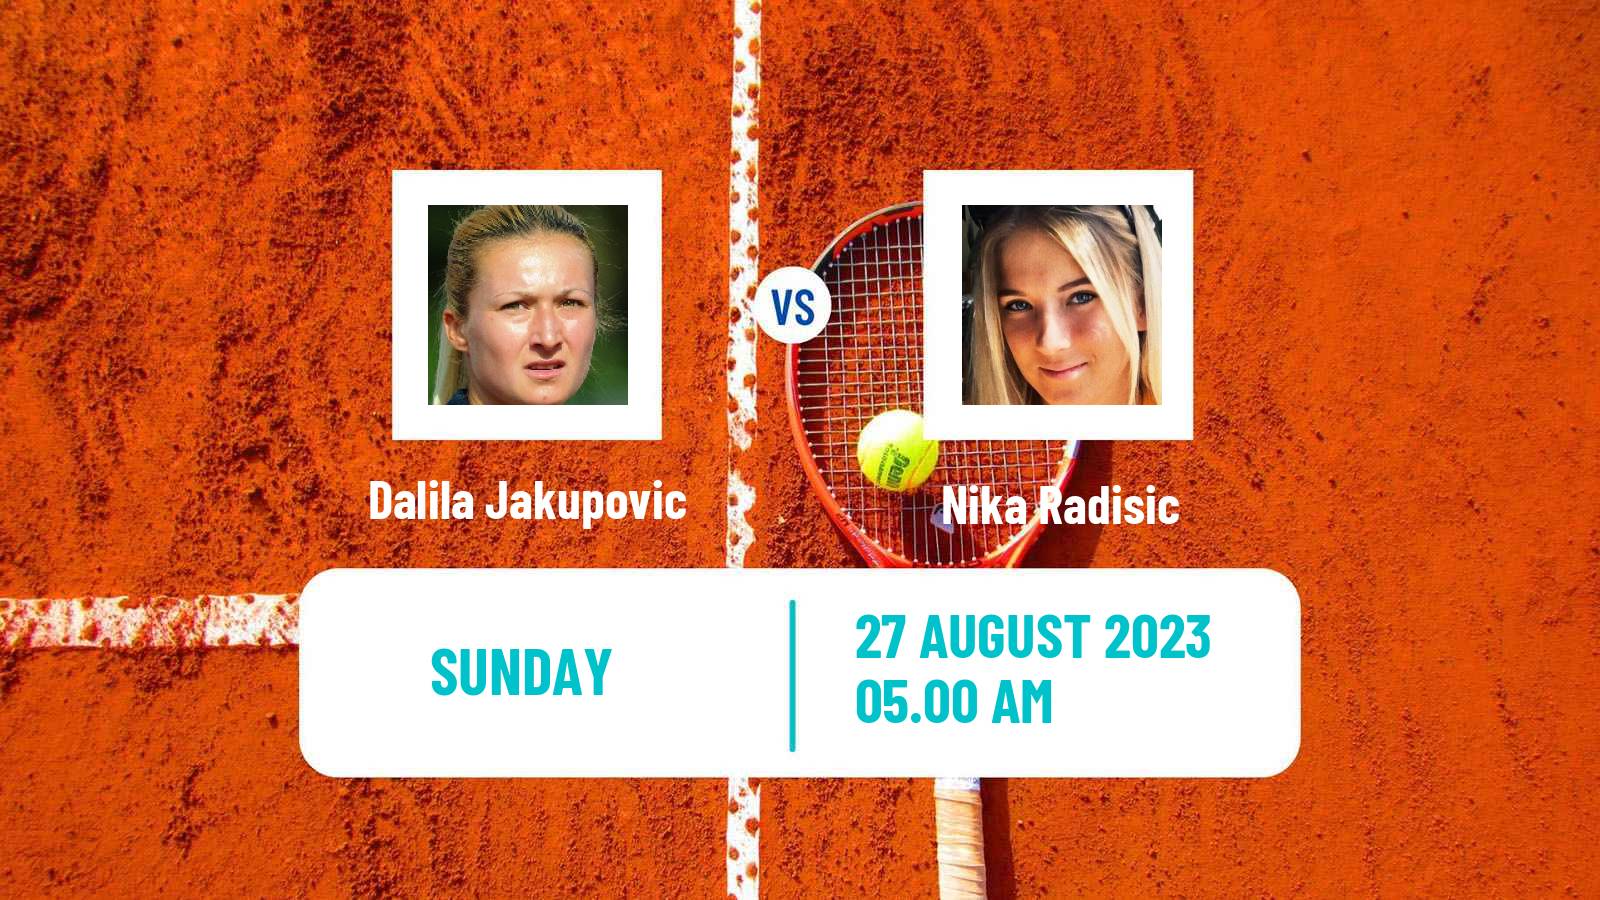 Tennis ITF W25 Bydgoszcz Women Dalila Jakupovic - Nika Radisic